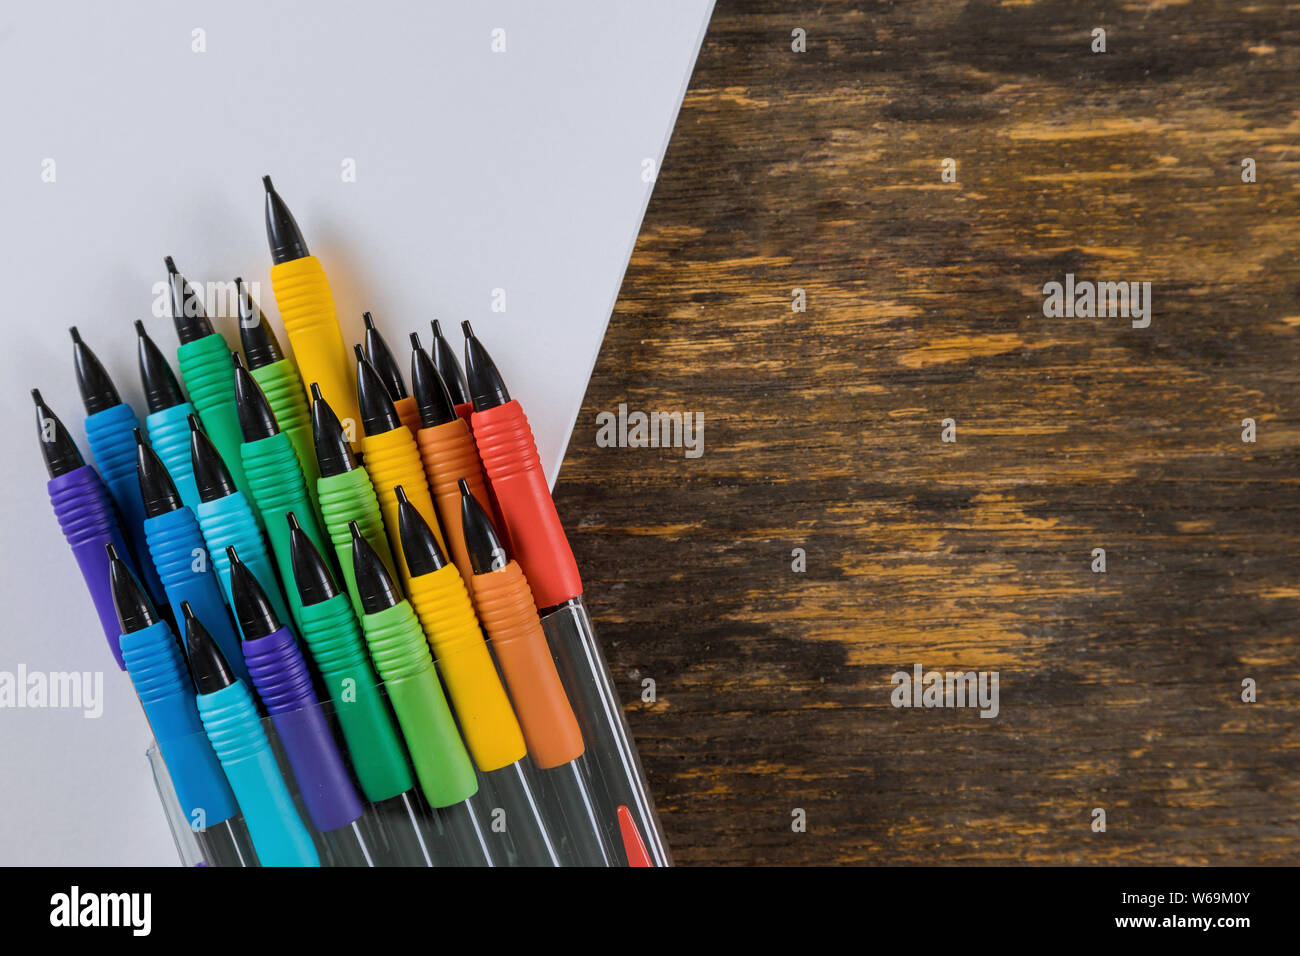 https://c8.alamy.com/comp/W69M0Y/pencils-and-drawing-or-sketch-pad-on-wooden-background-school-stationery-W69M0Y.jpg